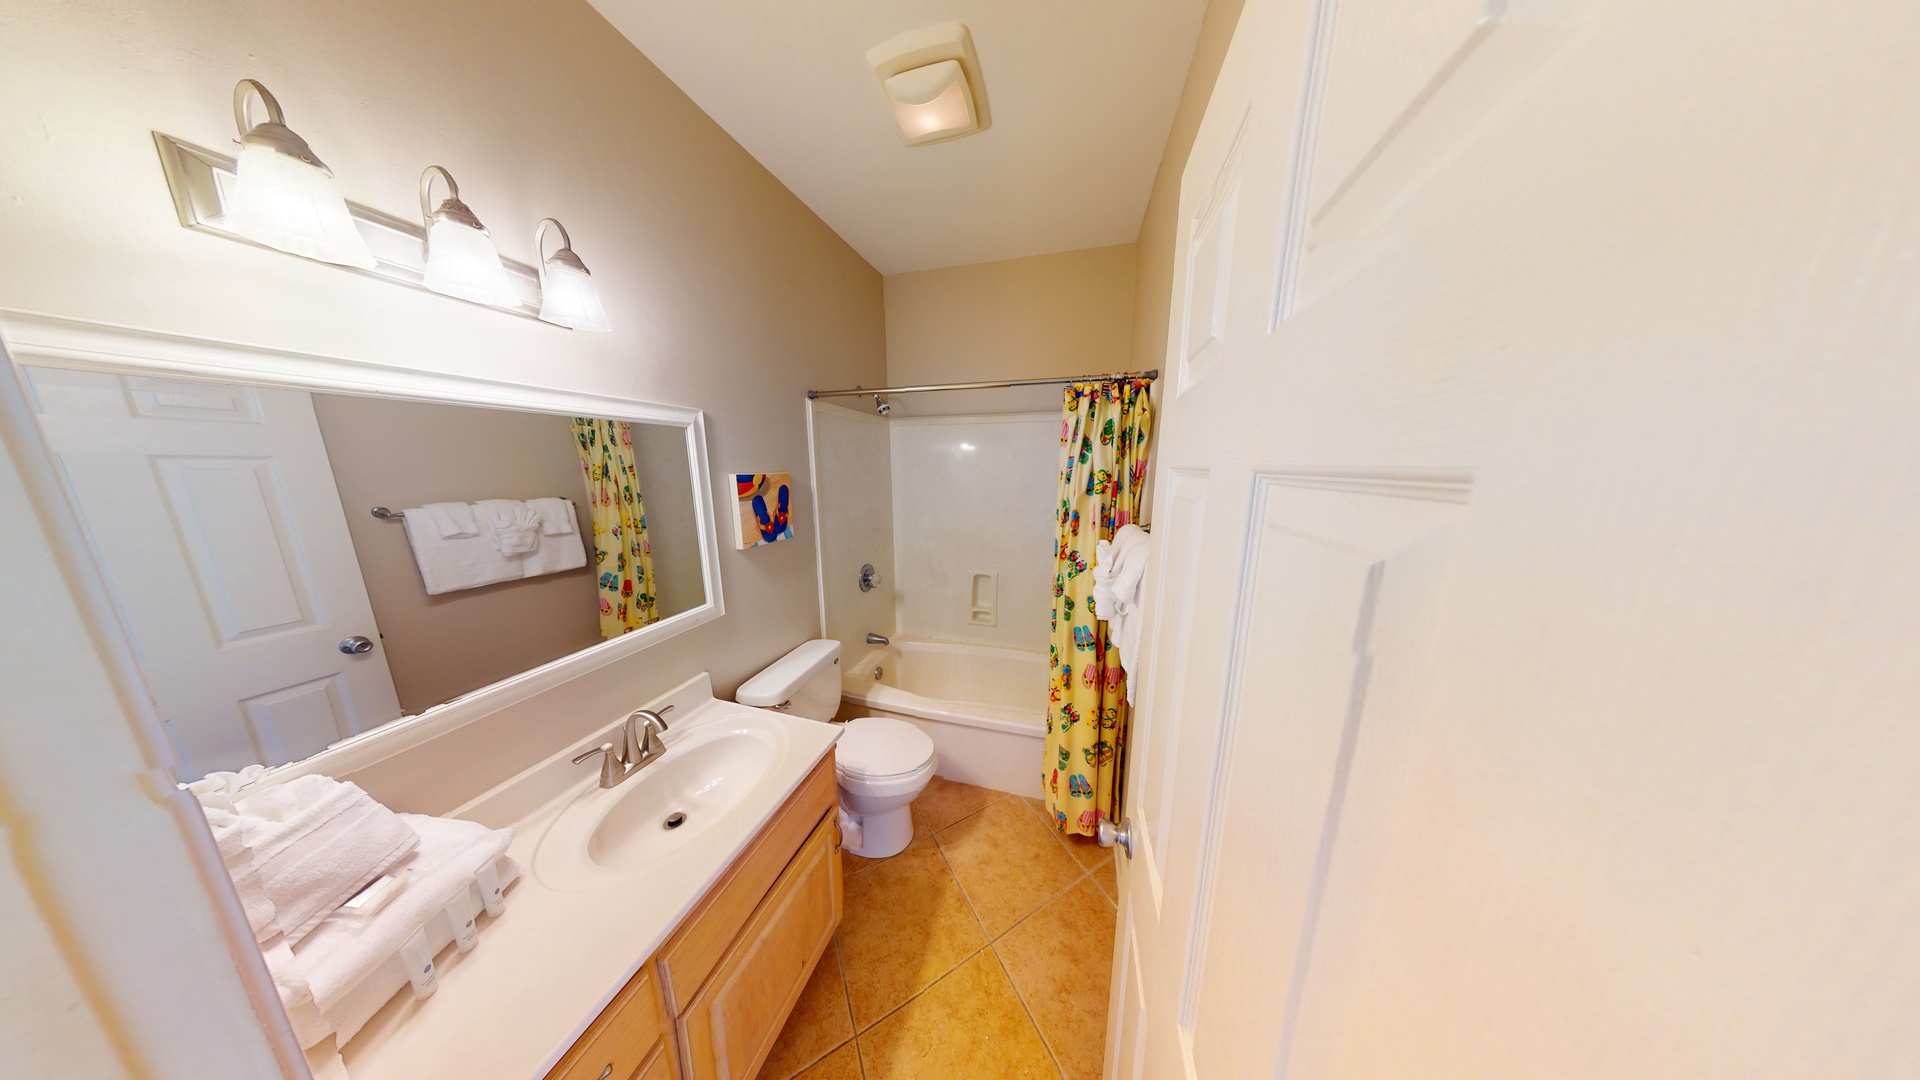 1st floor shared hall bathroom with a tub/shower combo